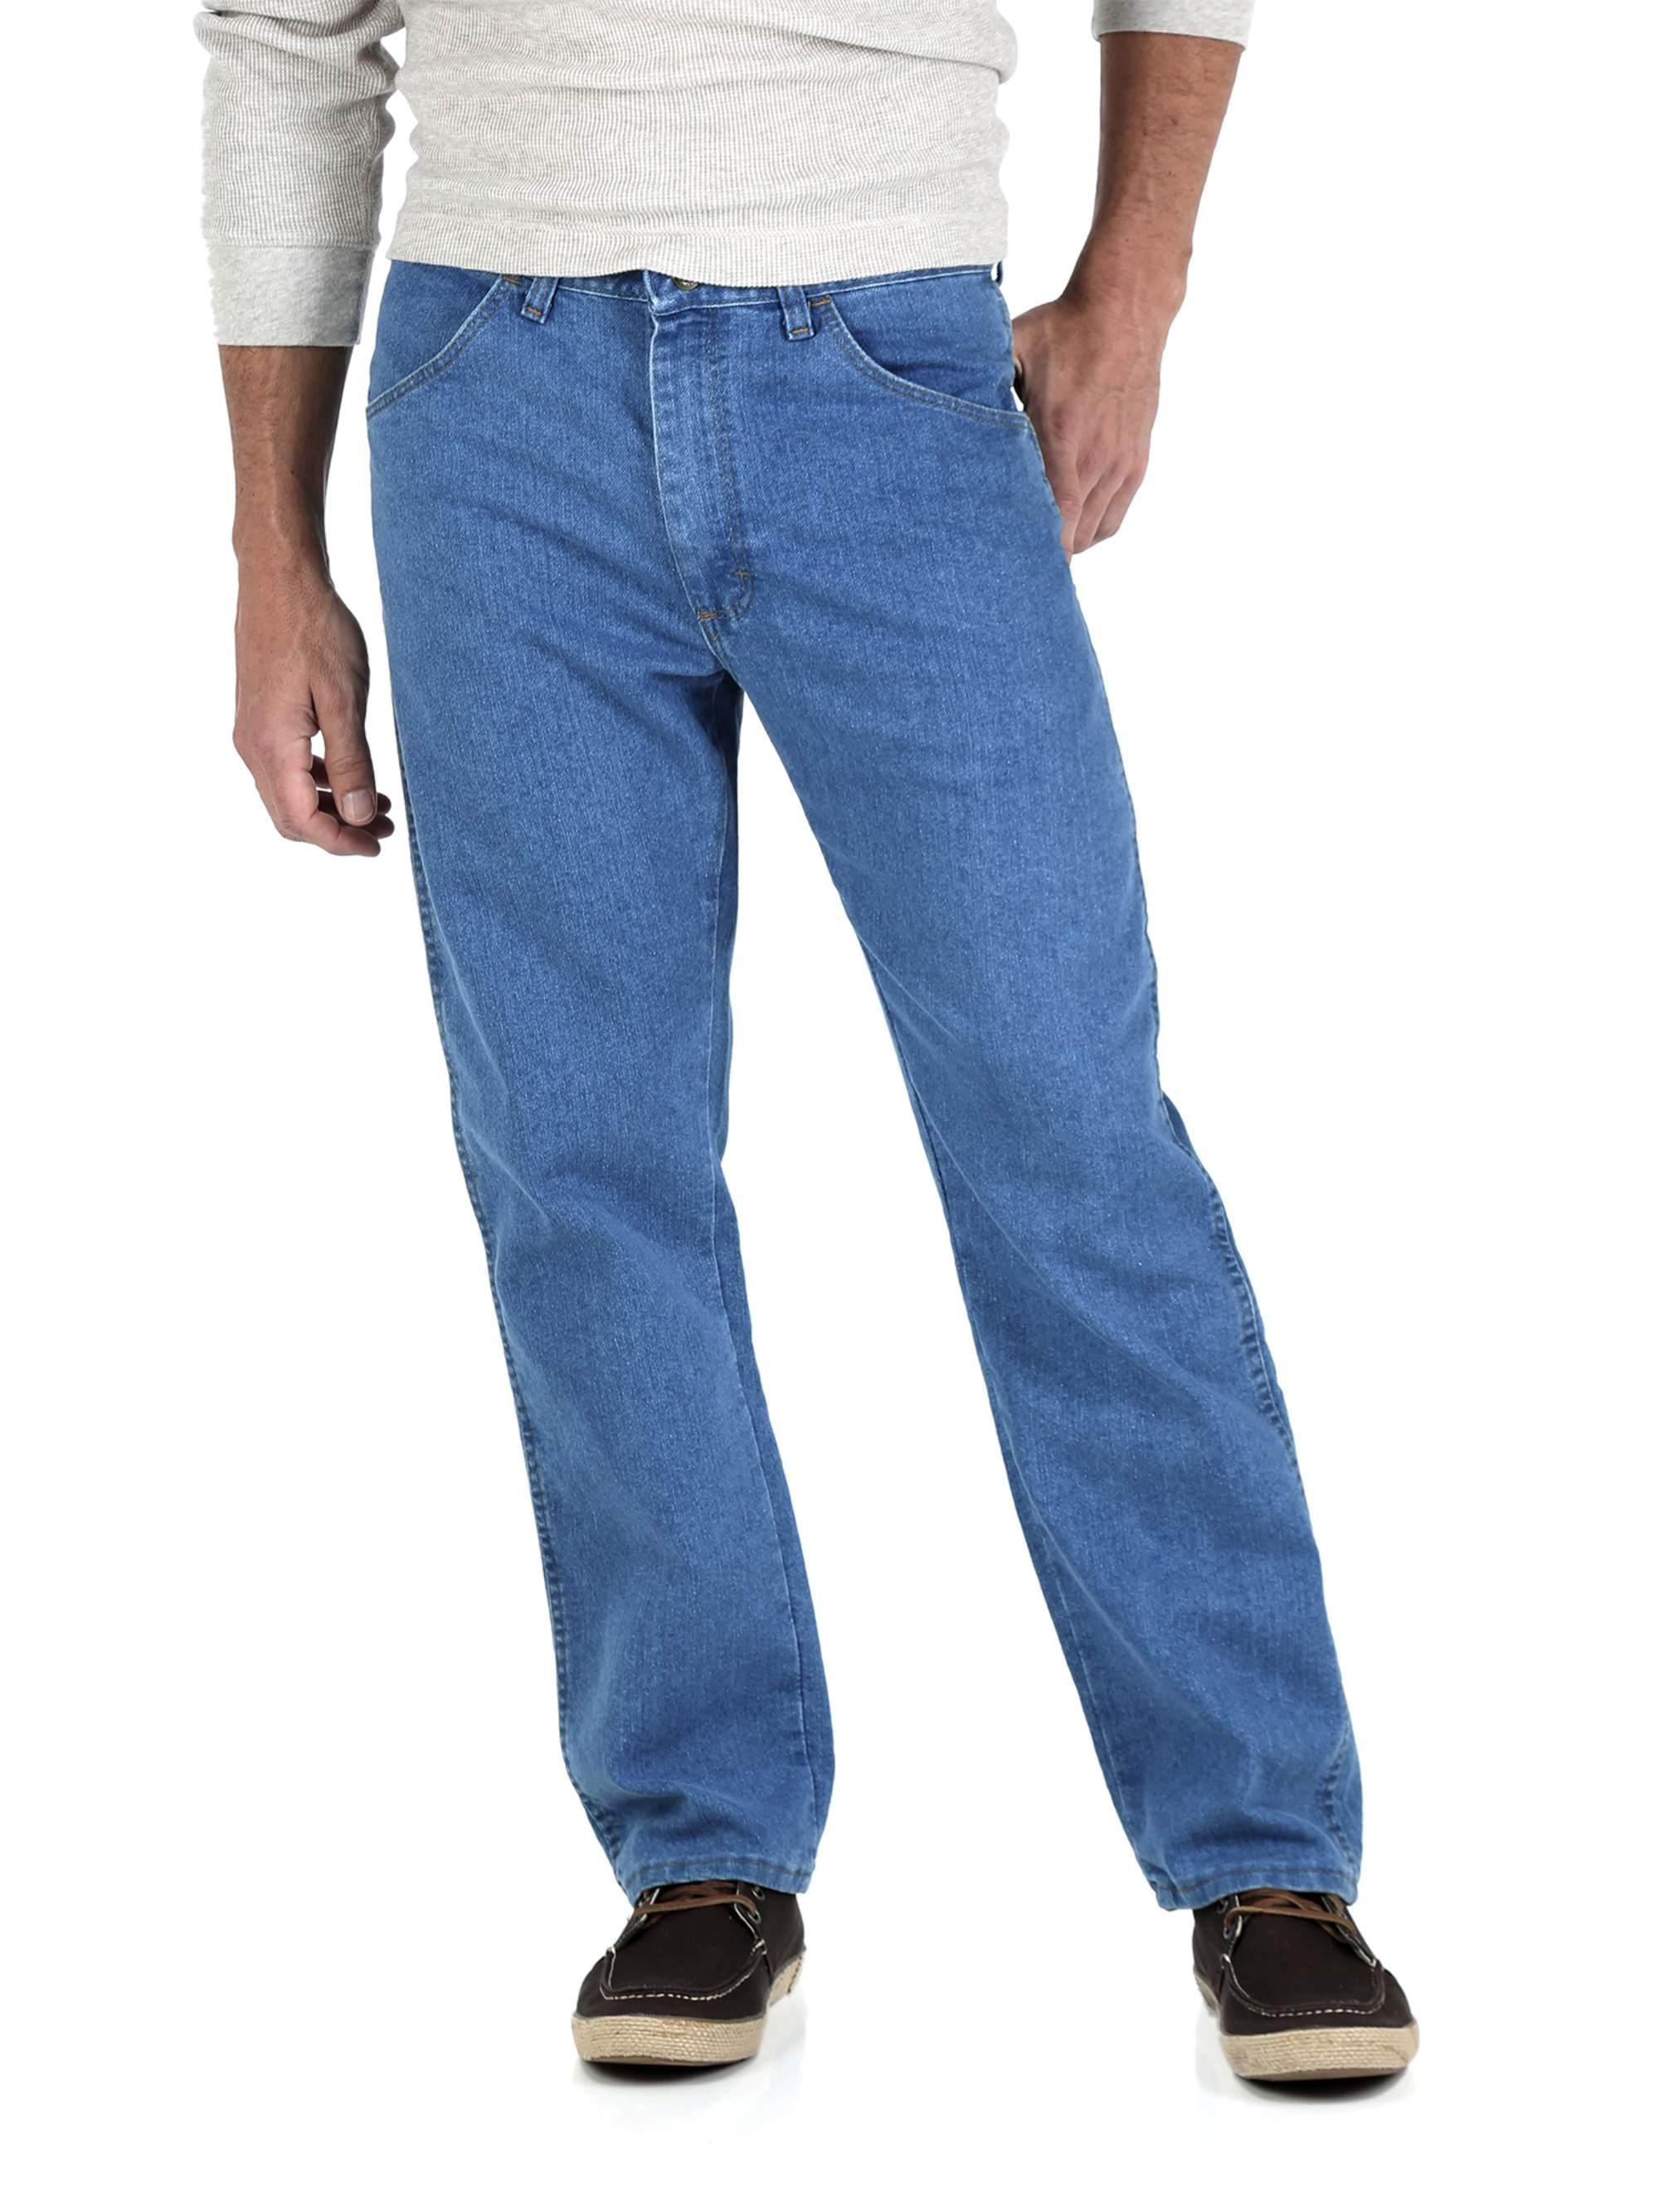 walmart stretch jeans mens